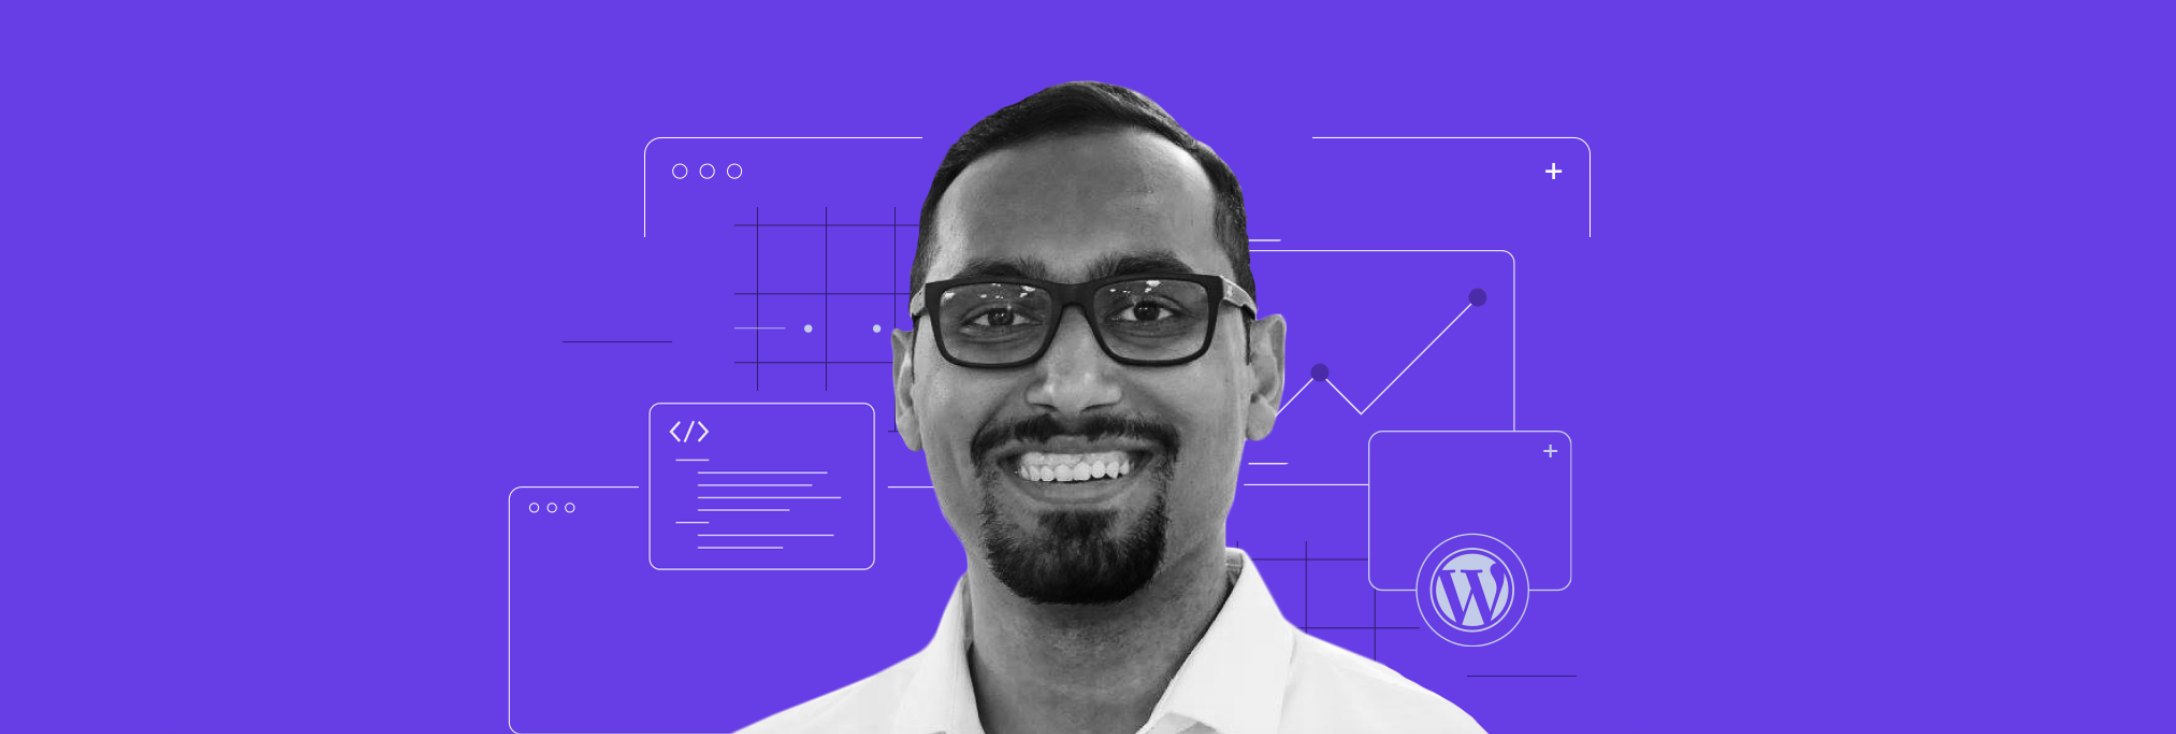 Le preguntamos a Syed Balkhi, fundador de BeginnerWP, qué opina acerca del futuro de WordPress￼￼￼